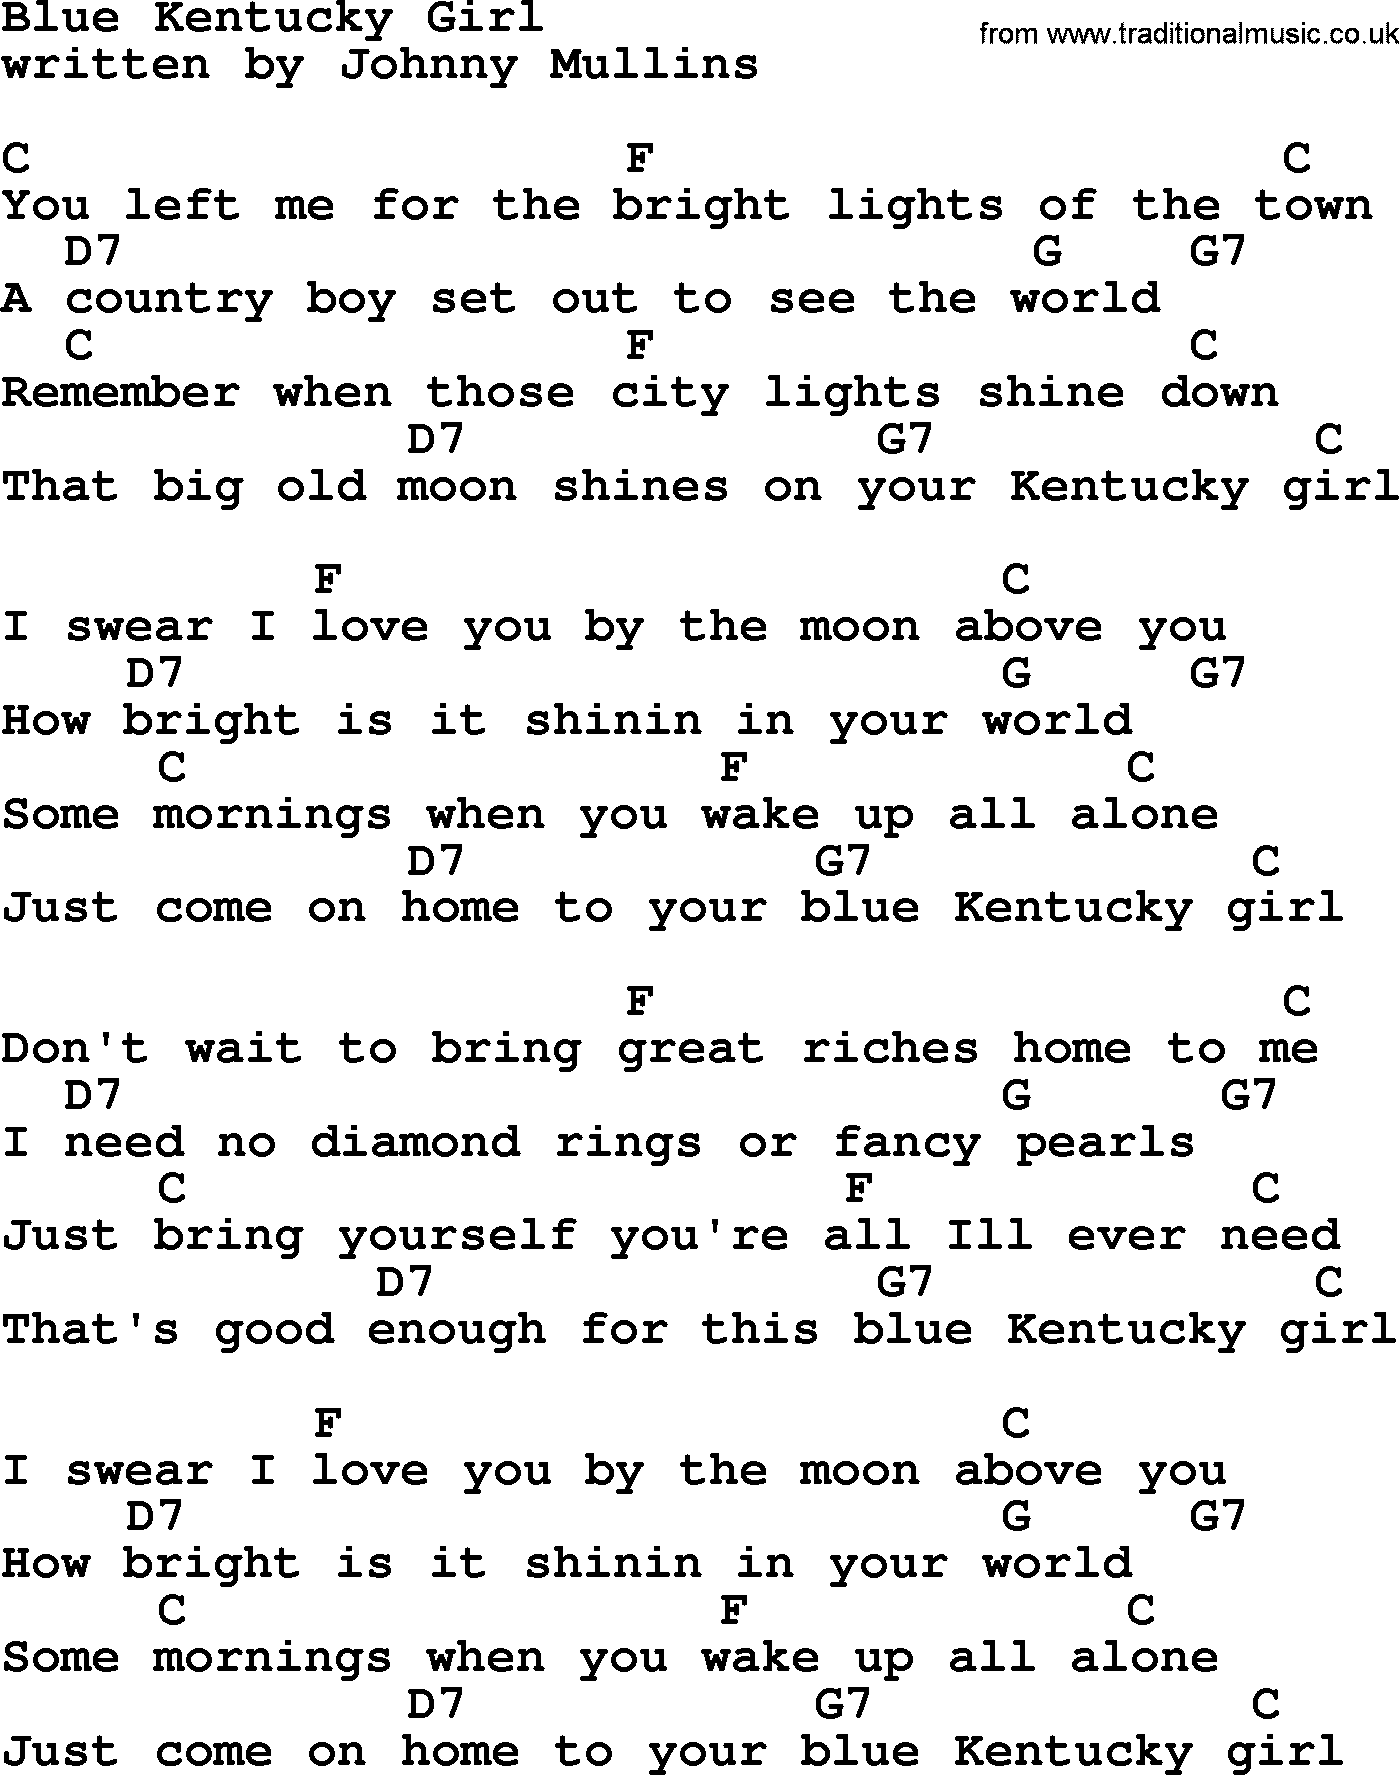 Loretta Lynn song: Blue Kentucky Girl lyrics and chords